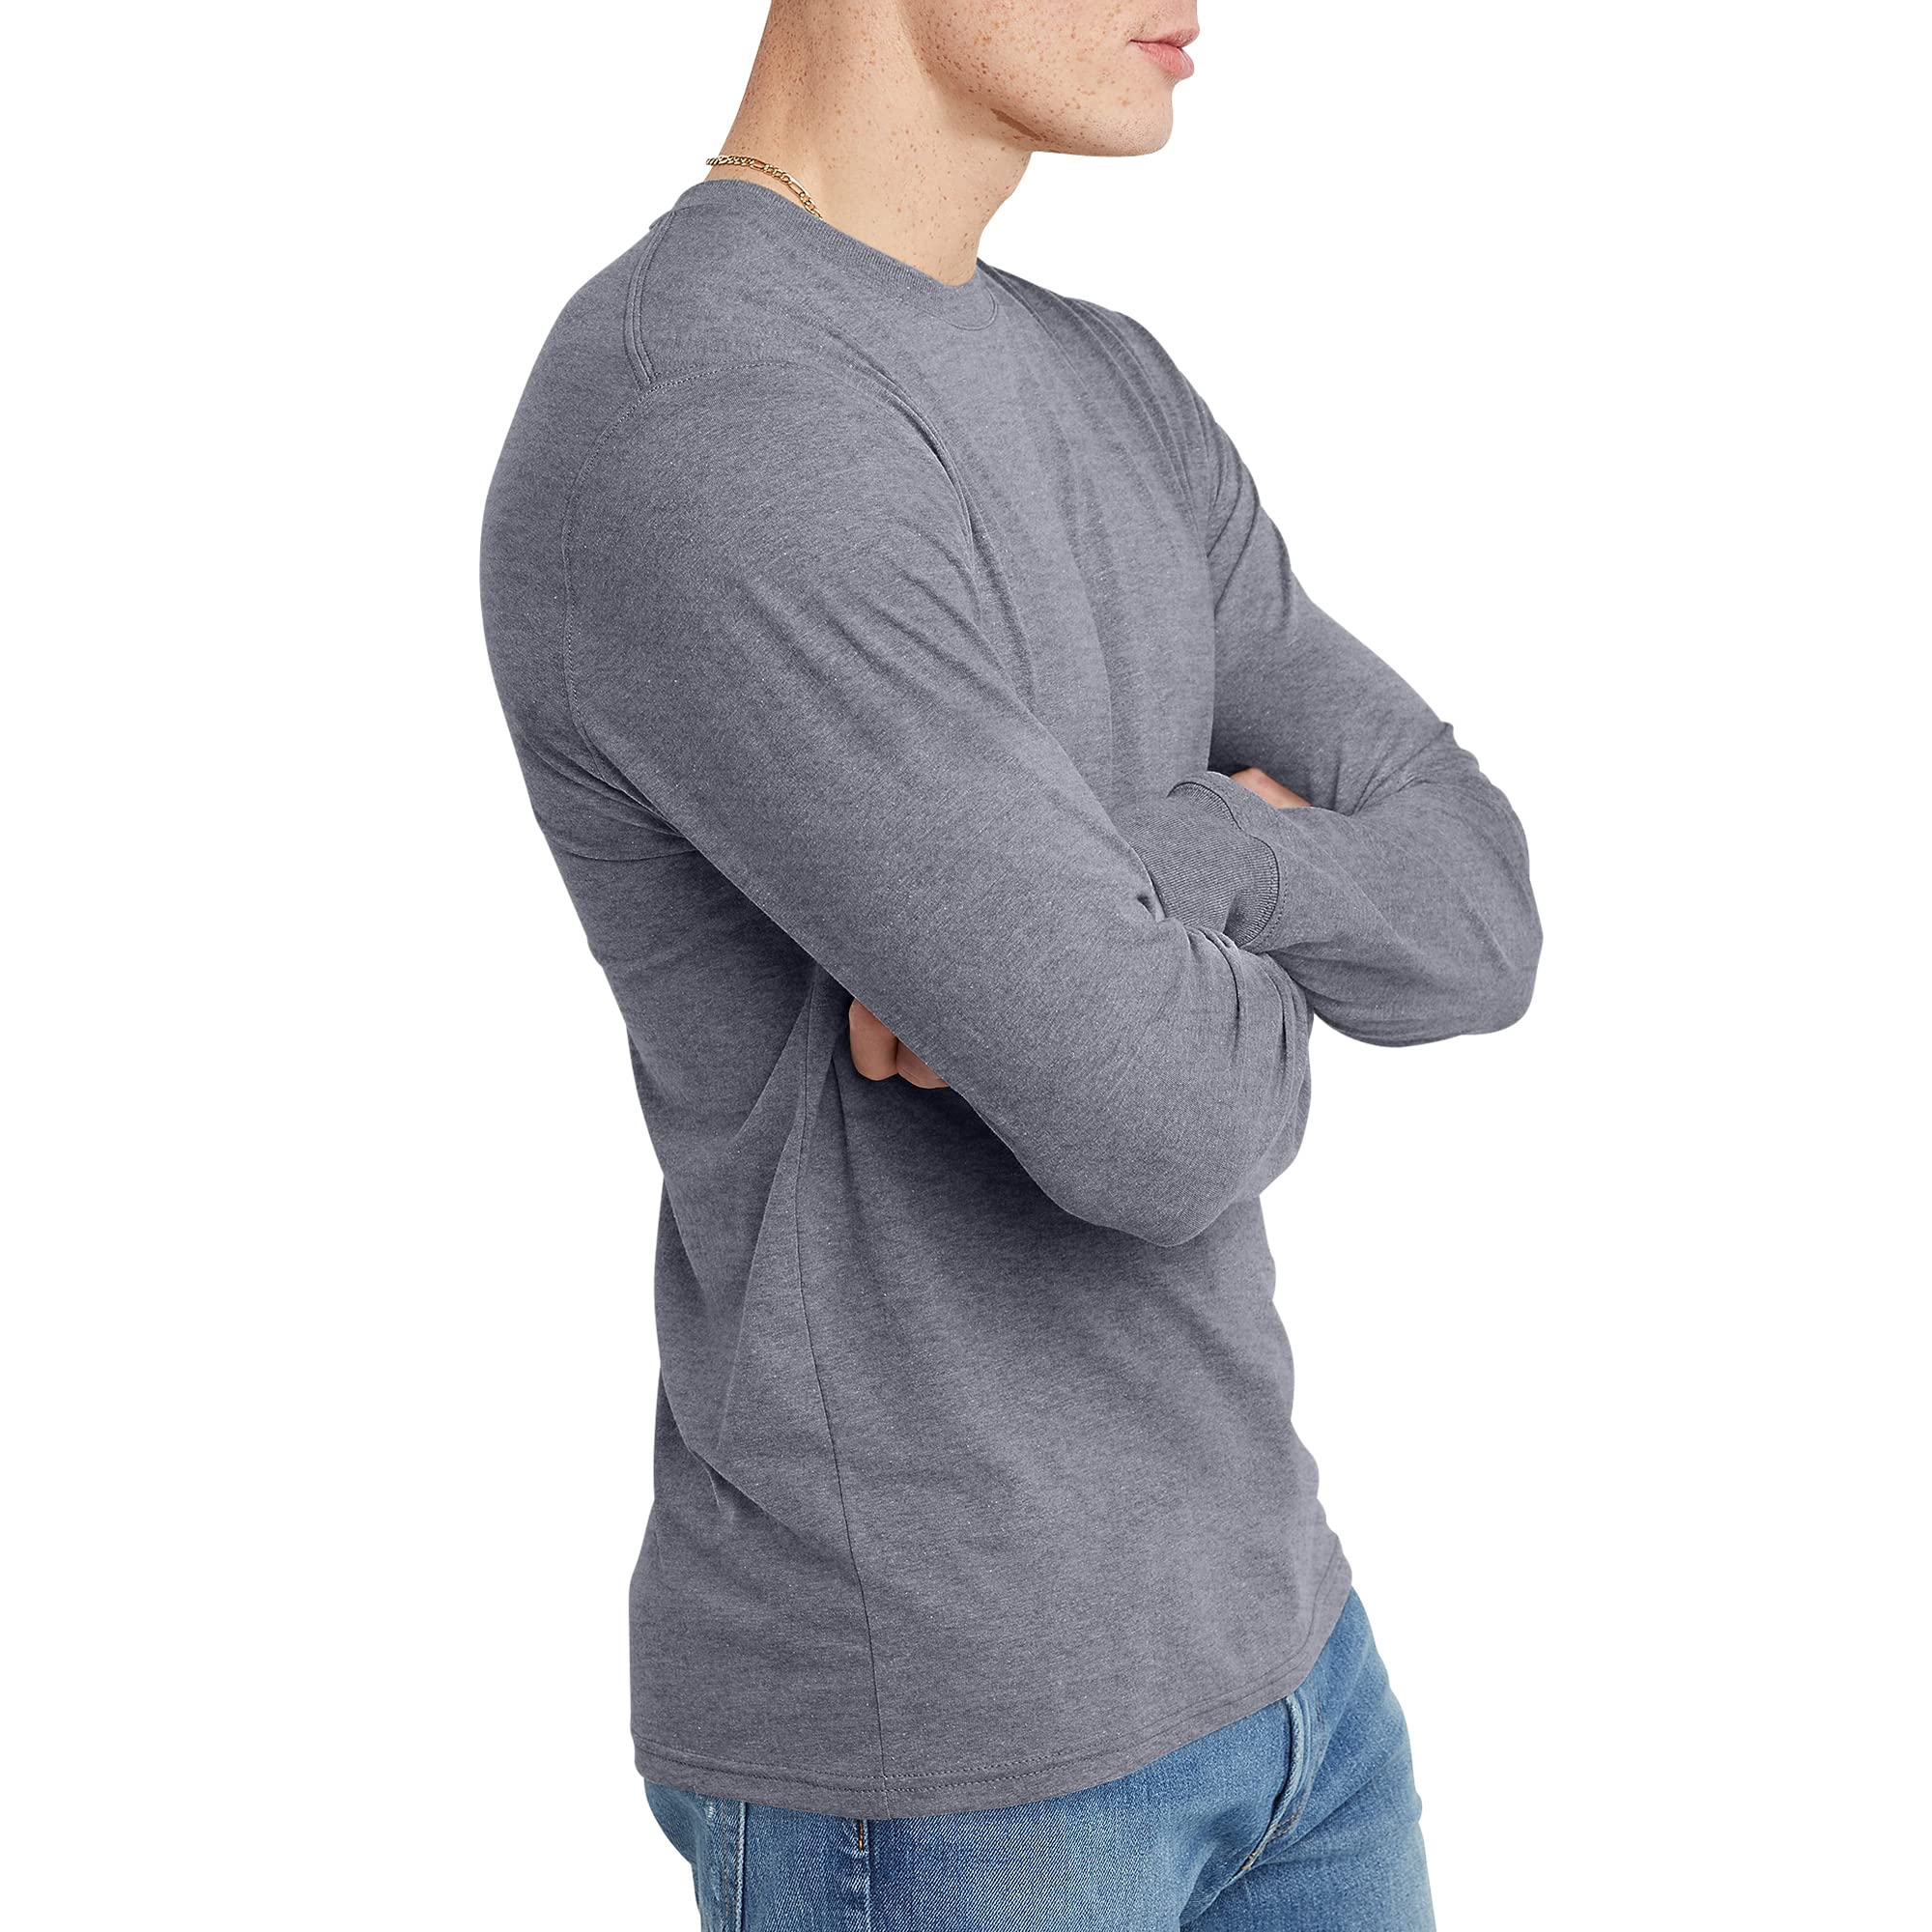 Hanes Men's Originals Long Sleeve T-Shirt, Lightweight Tri-Blend Jersey Tee for Men, Available in Tall